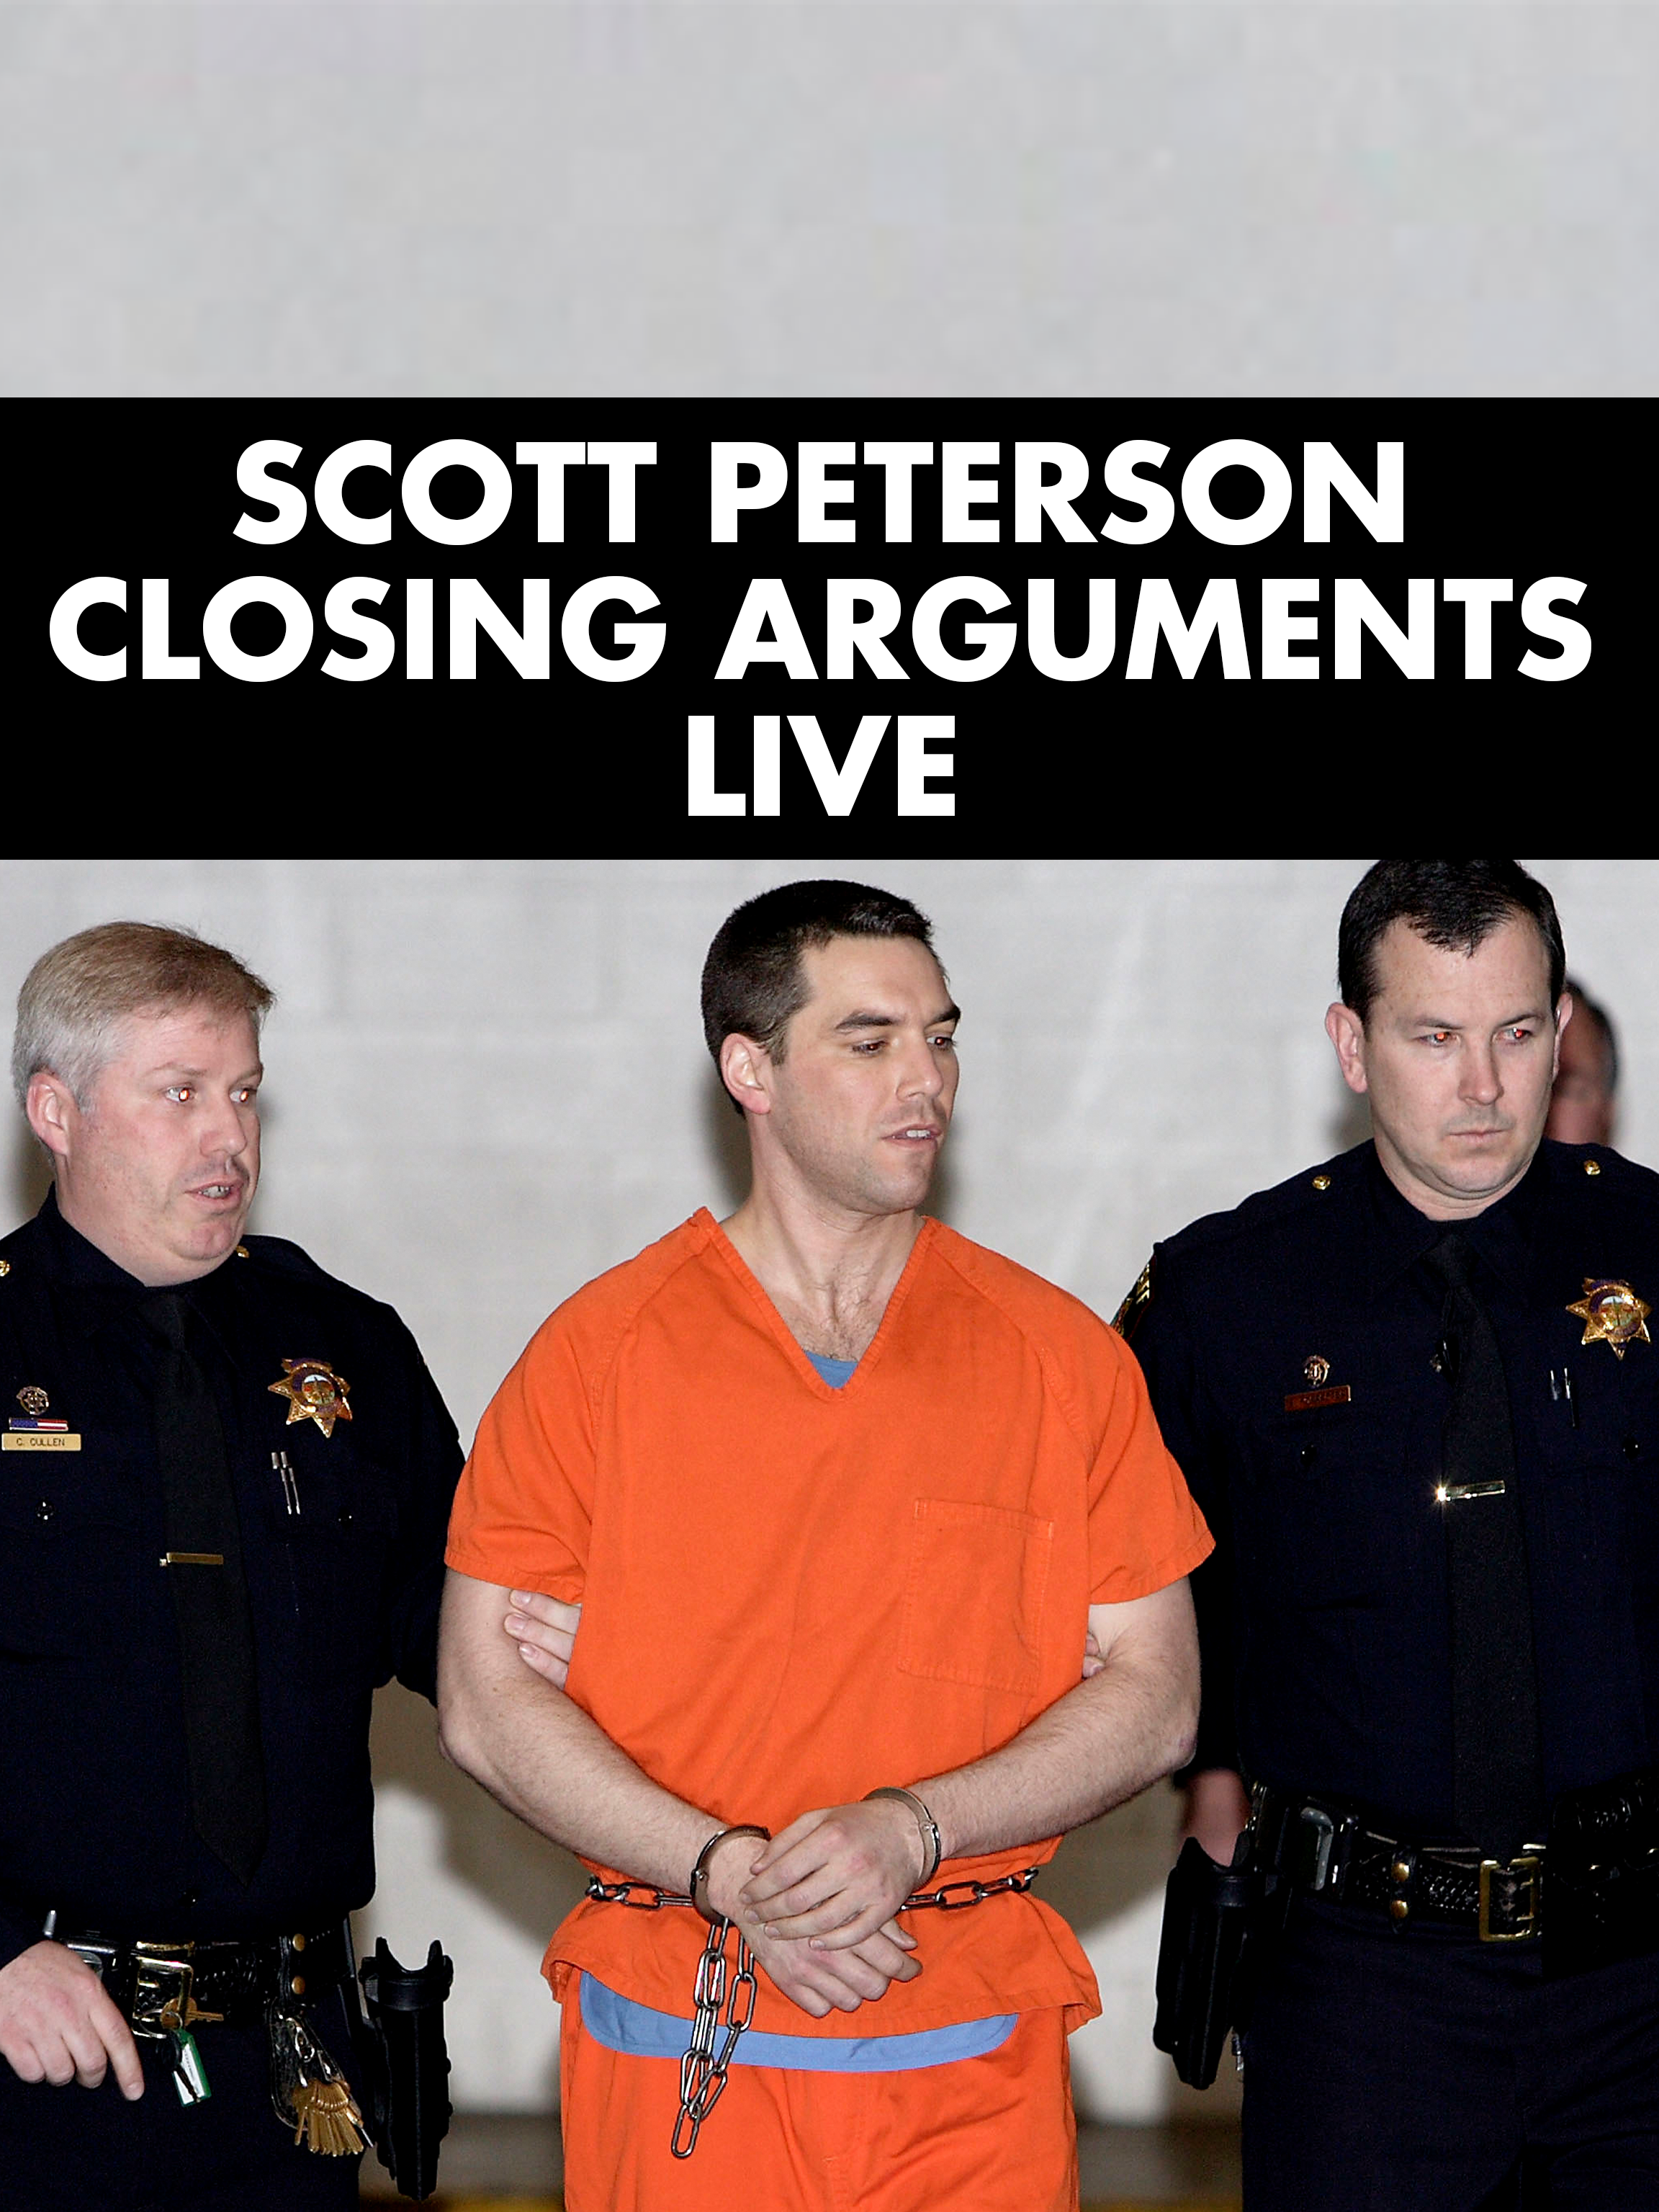 Scott Peterson Closing Arguments Live dcg-mark-poster